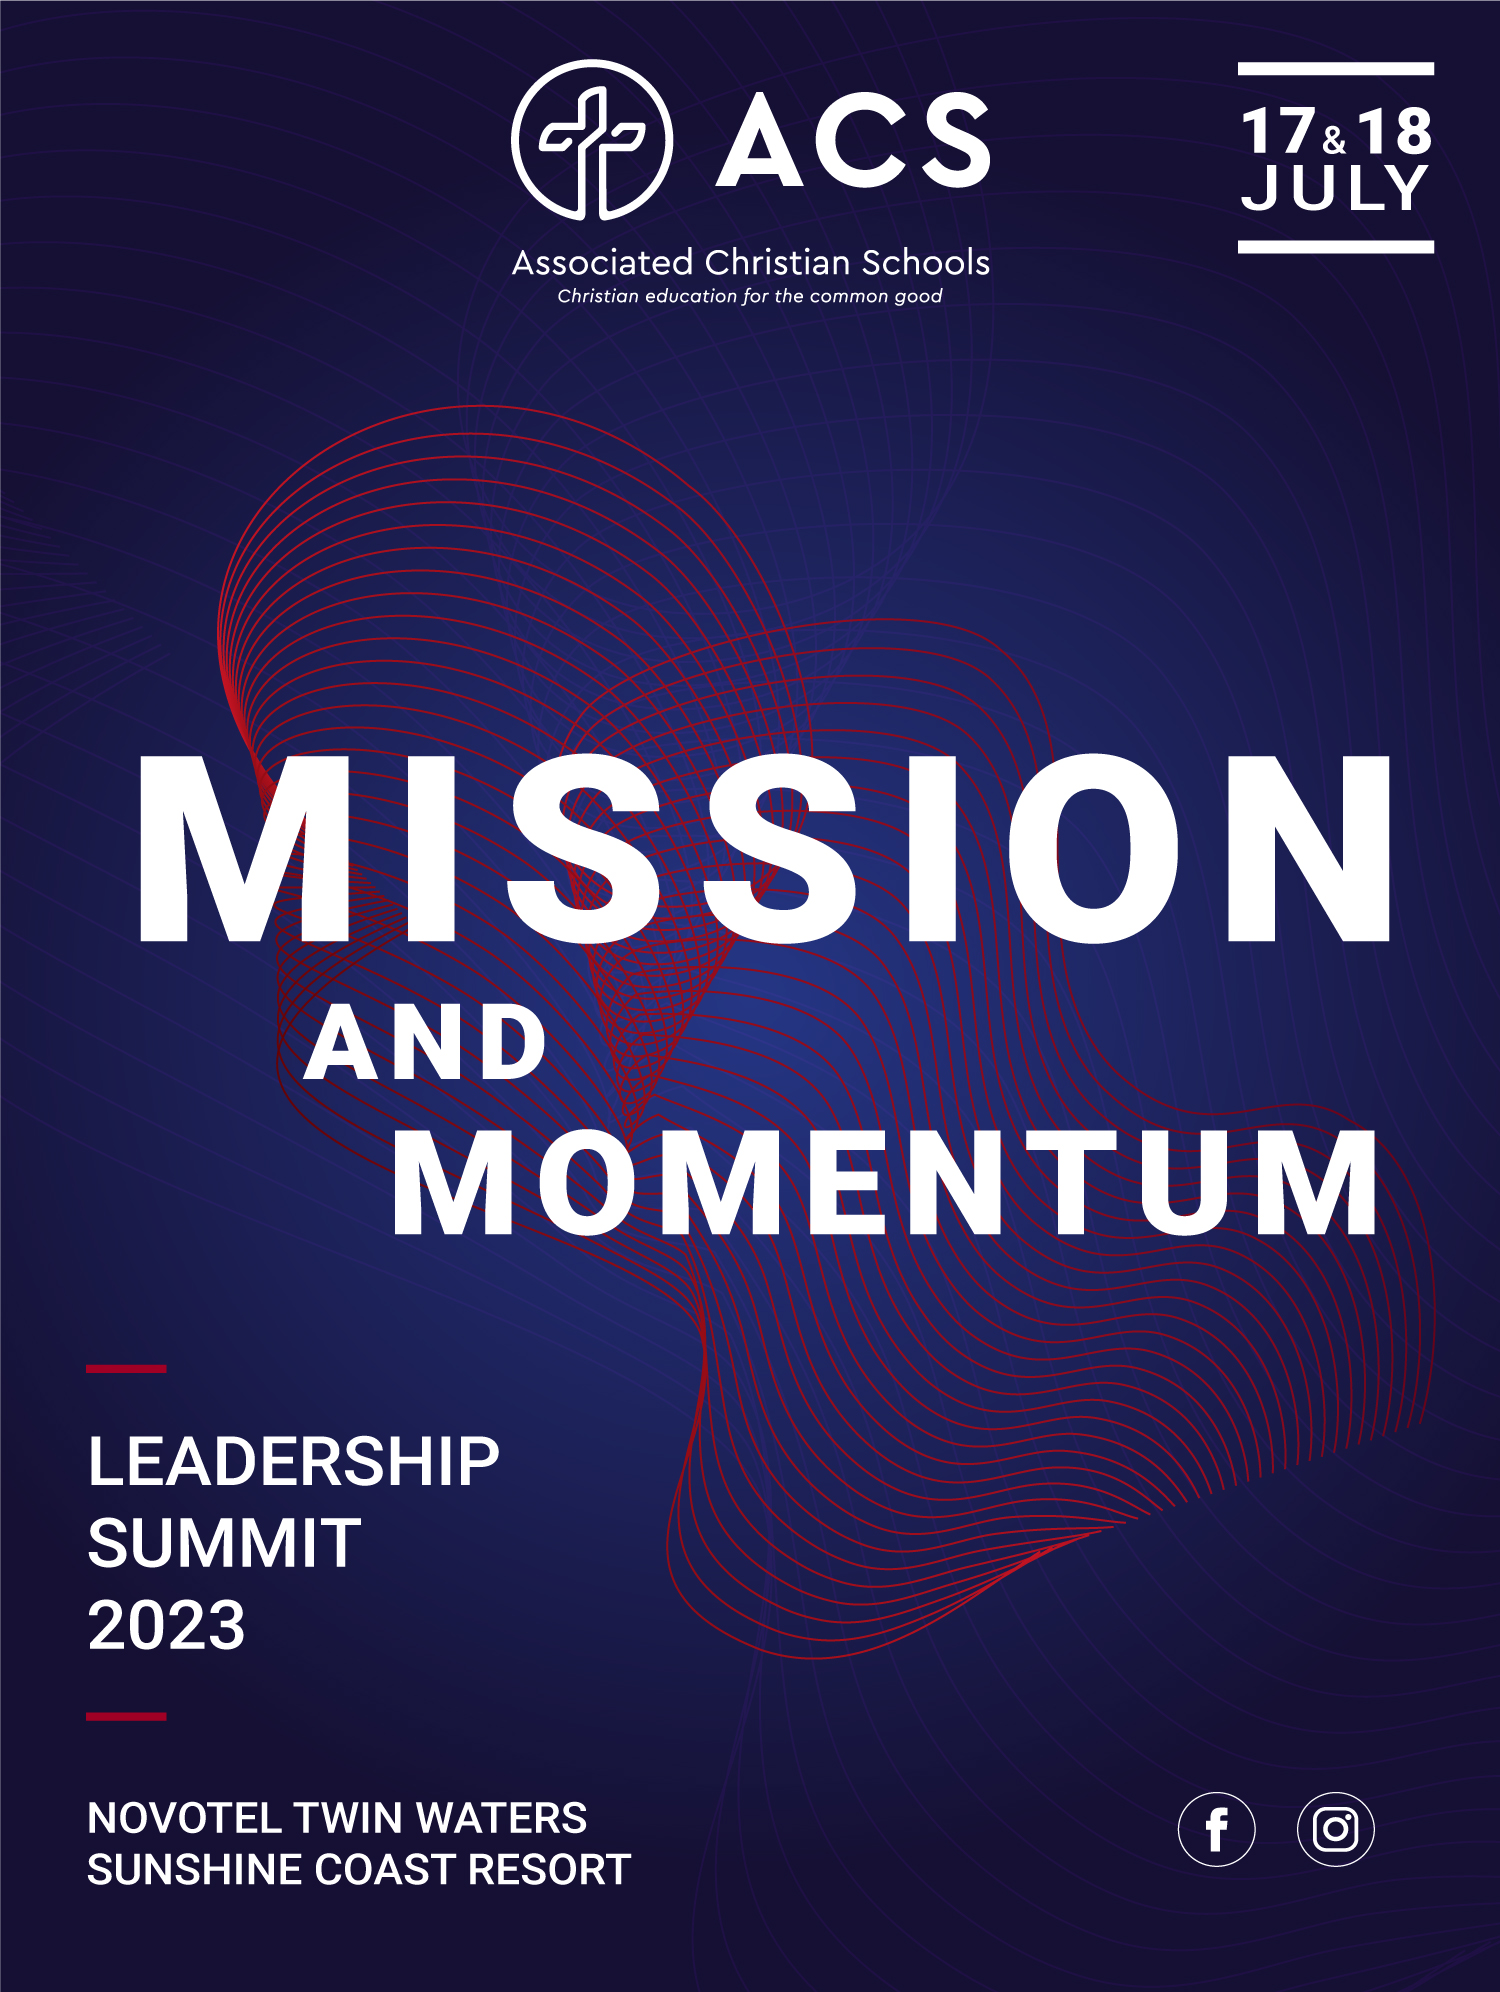 ACS Leadership Summit 2023 Associated Christian Schools